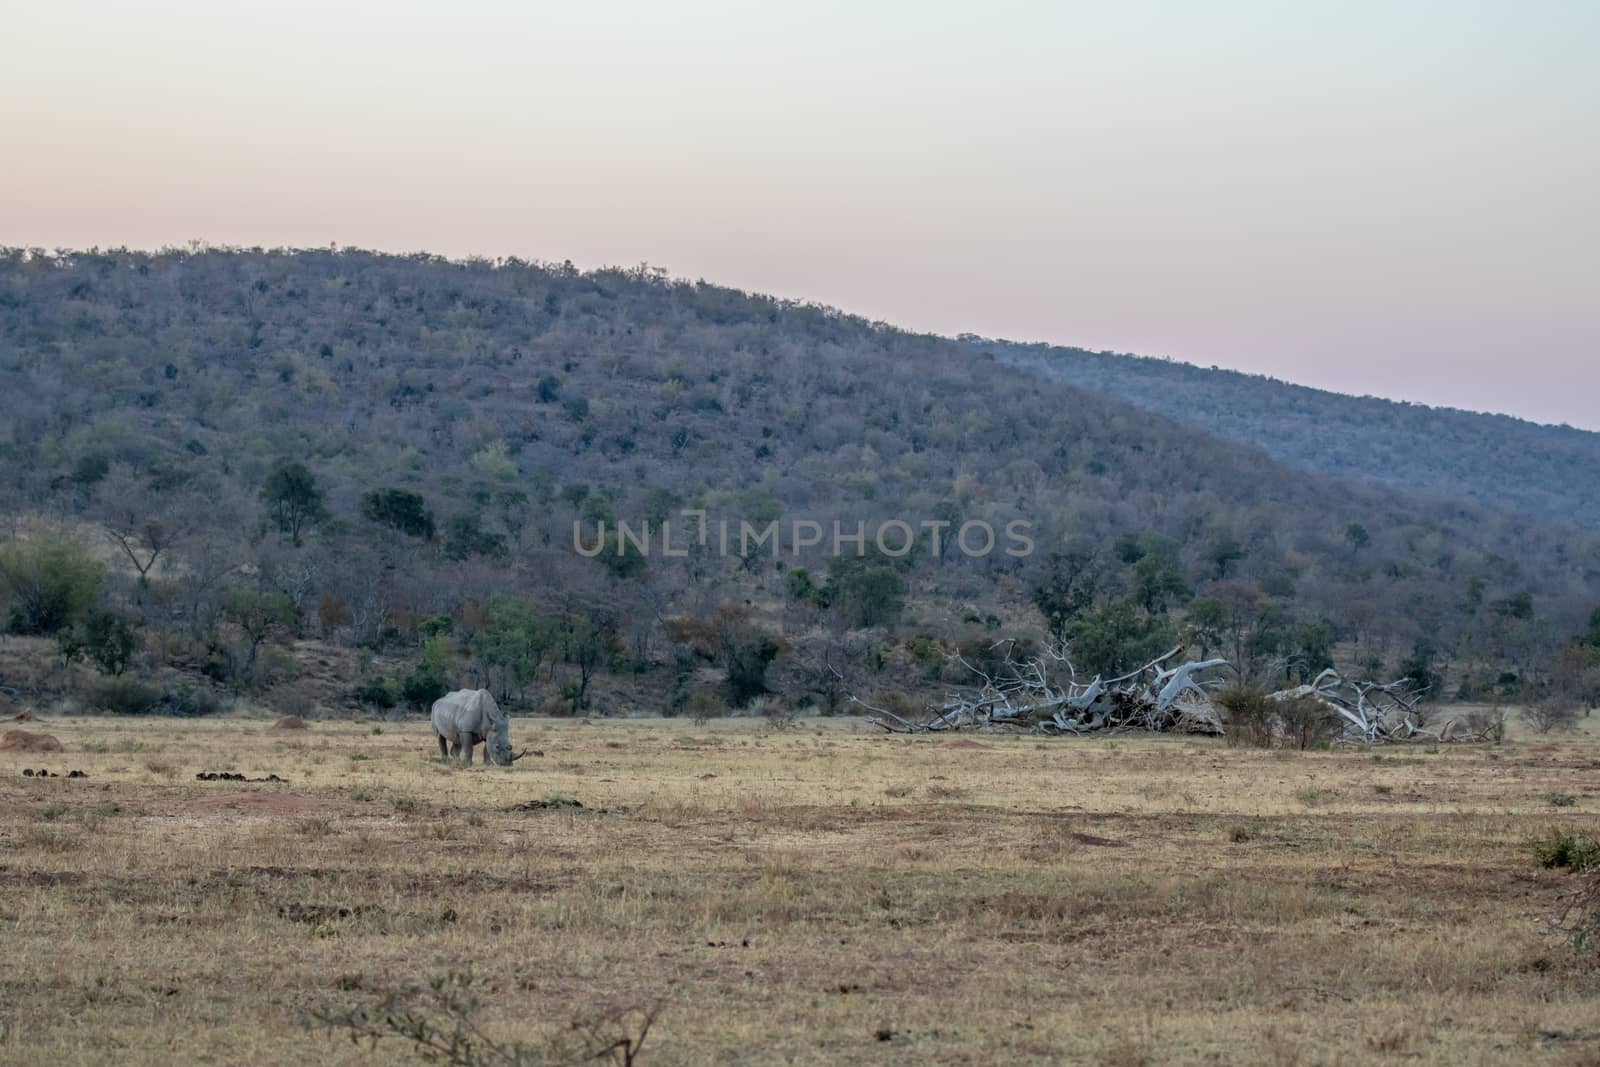 White rhino grazing in an open plain. by Simoneemanphotography